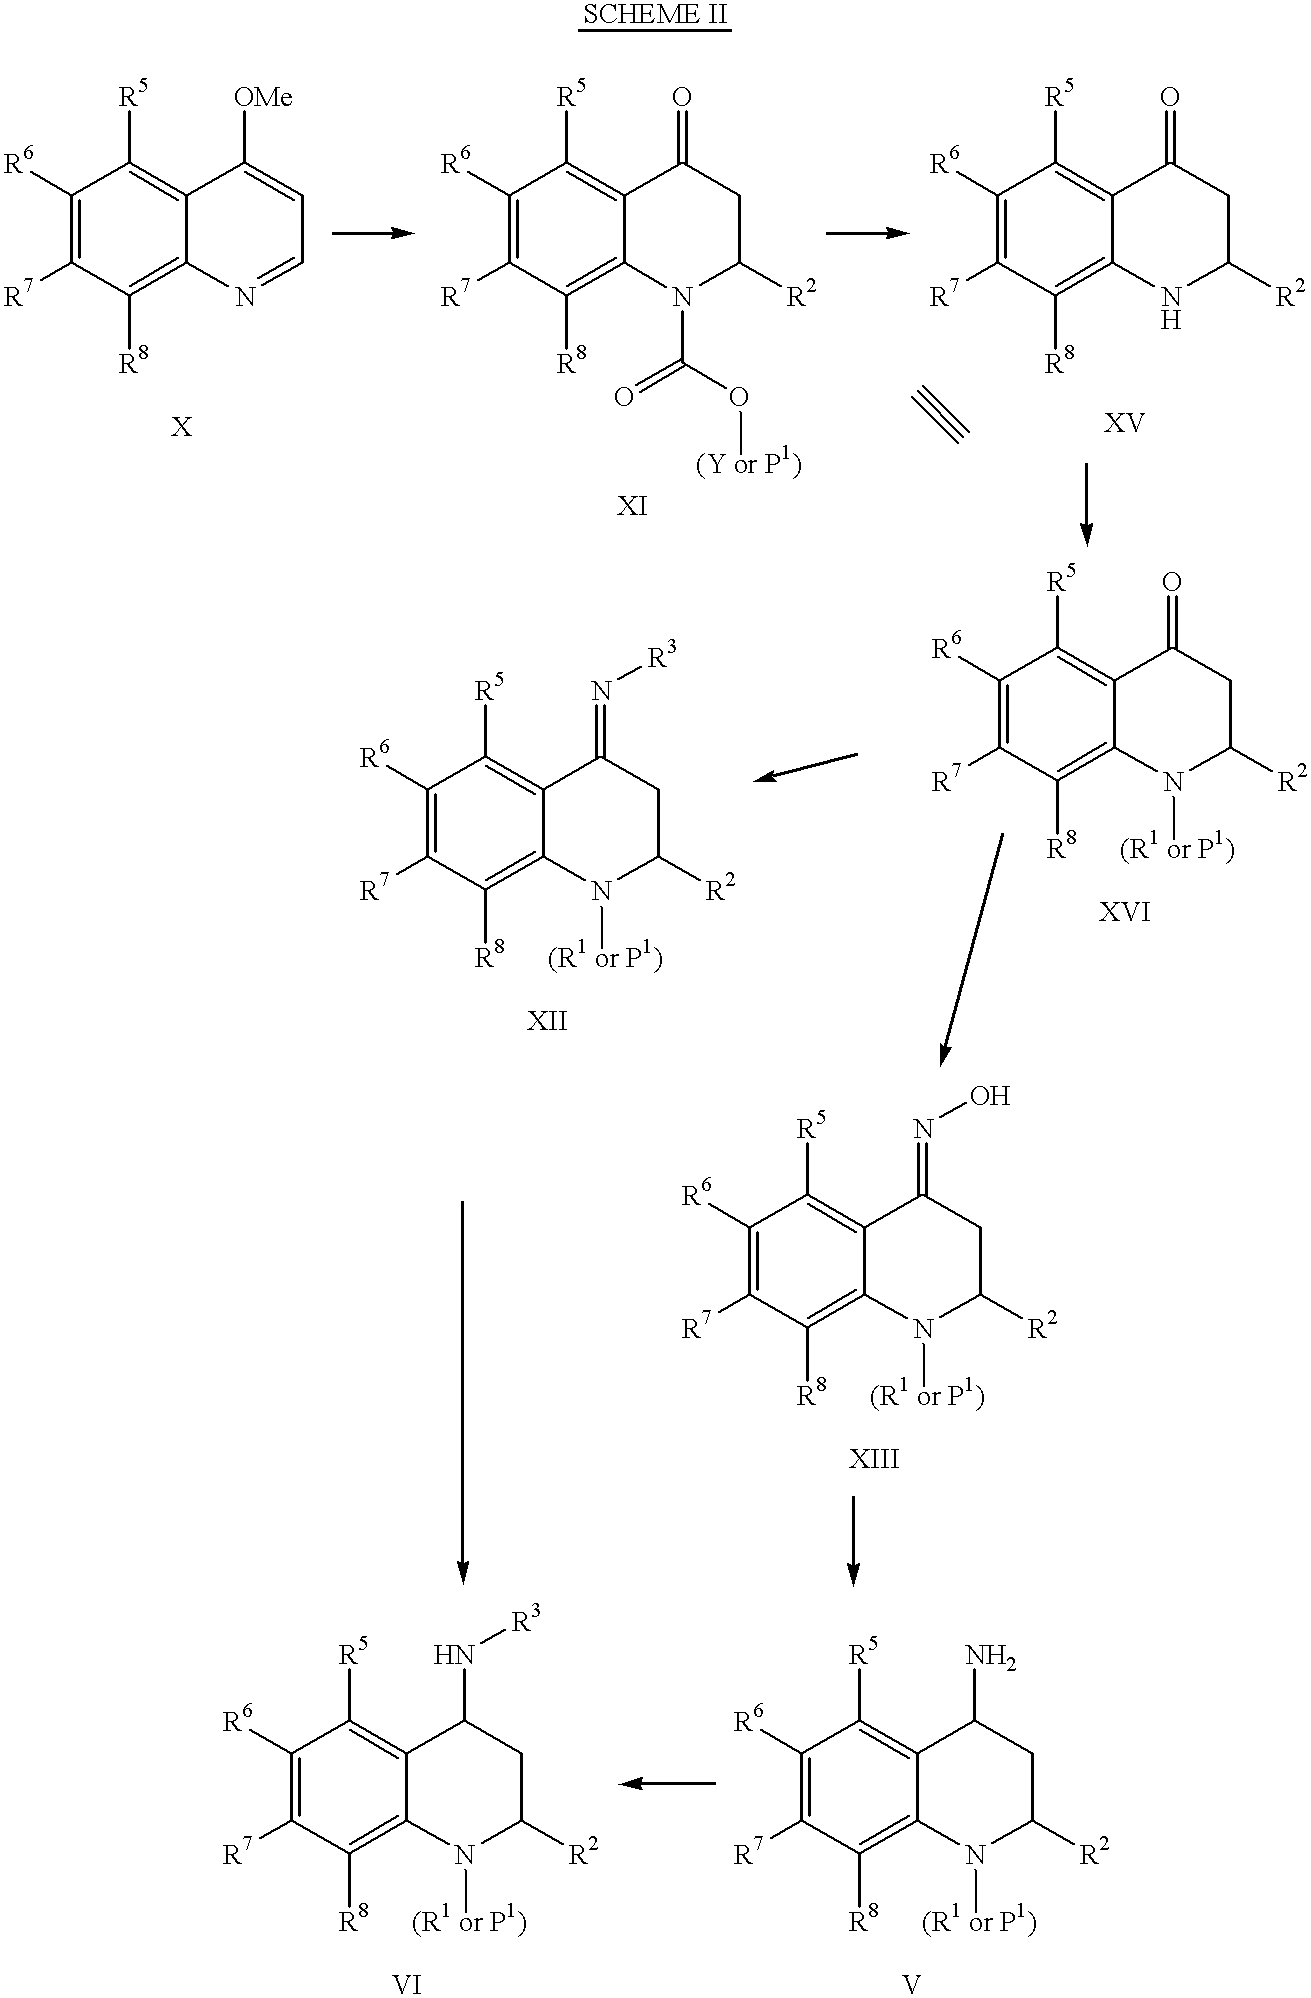 4-carboxyamino-2-substituted-1,2,3,4-tetrahydroquinolines